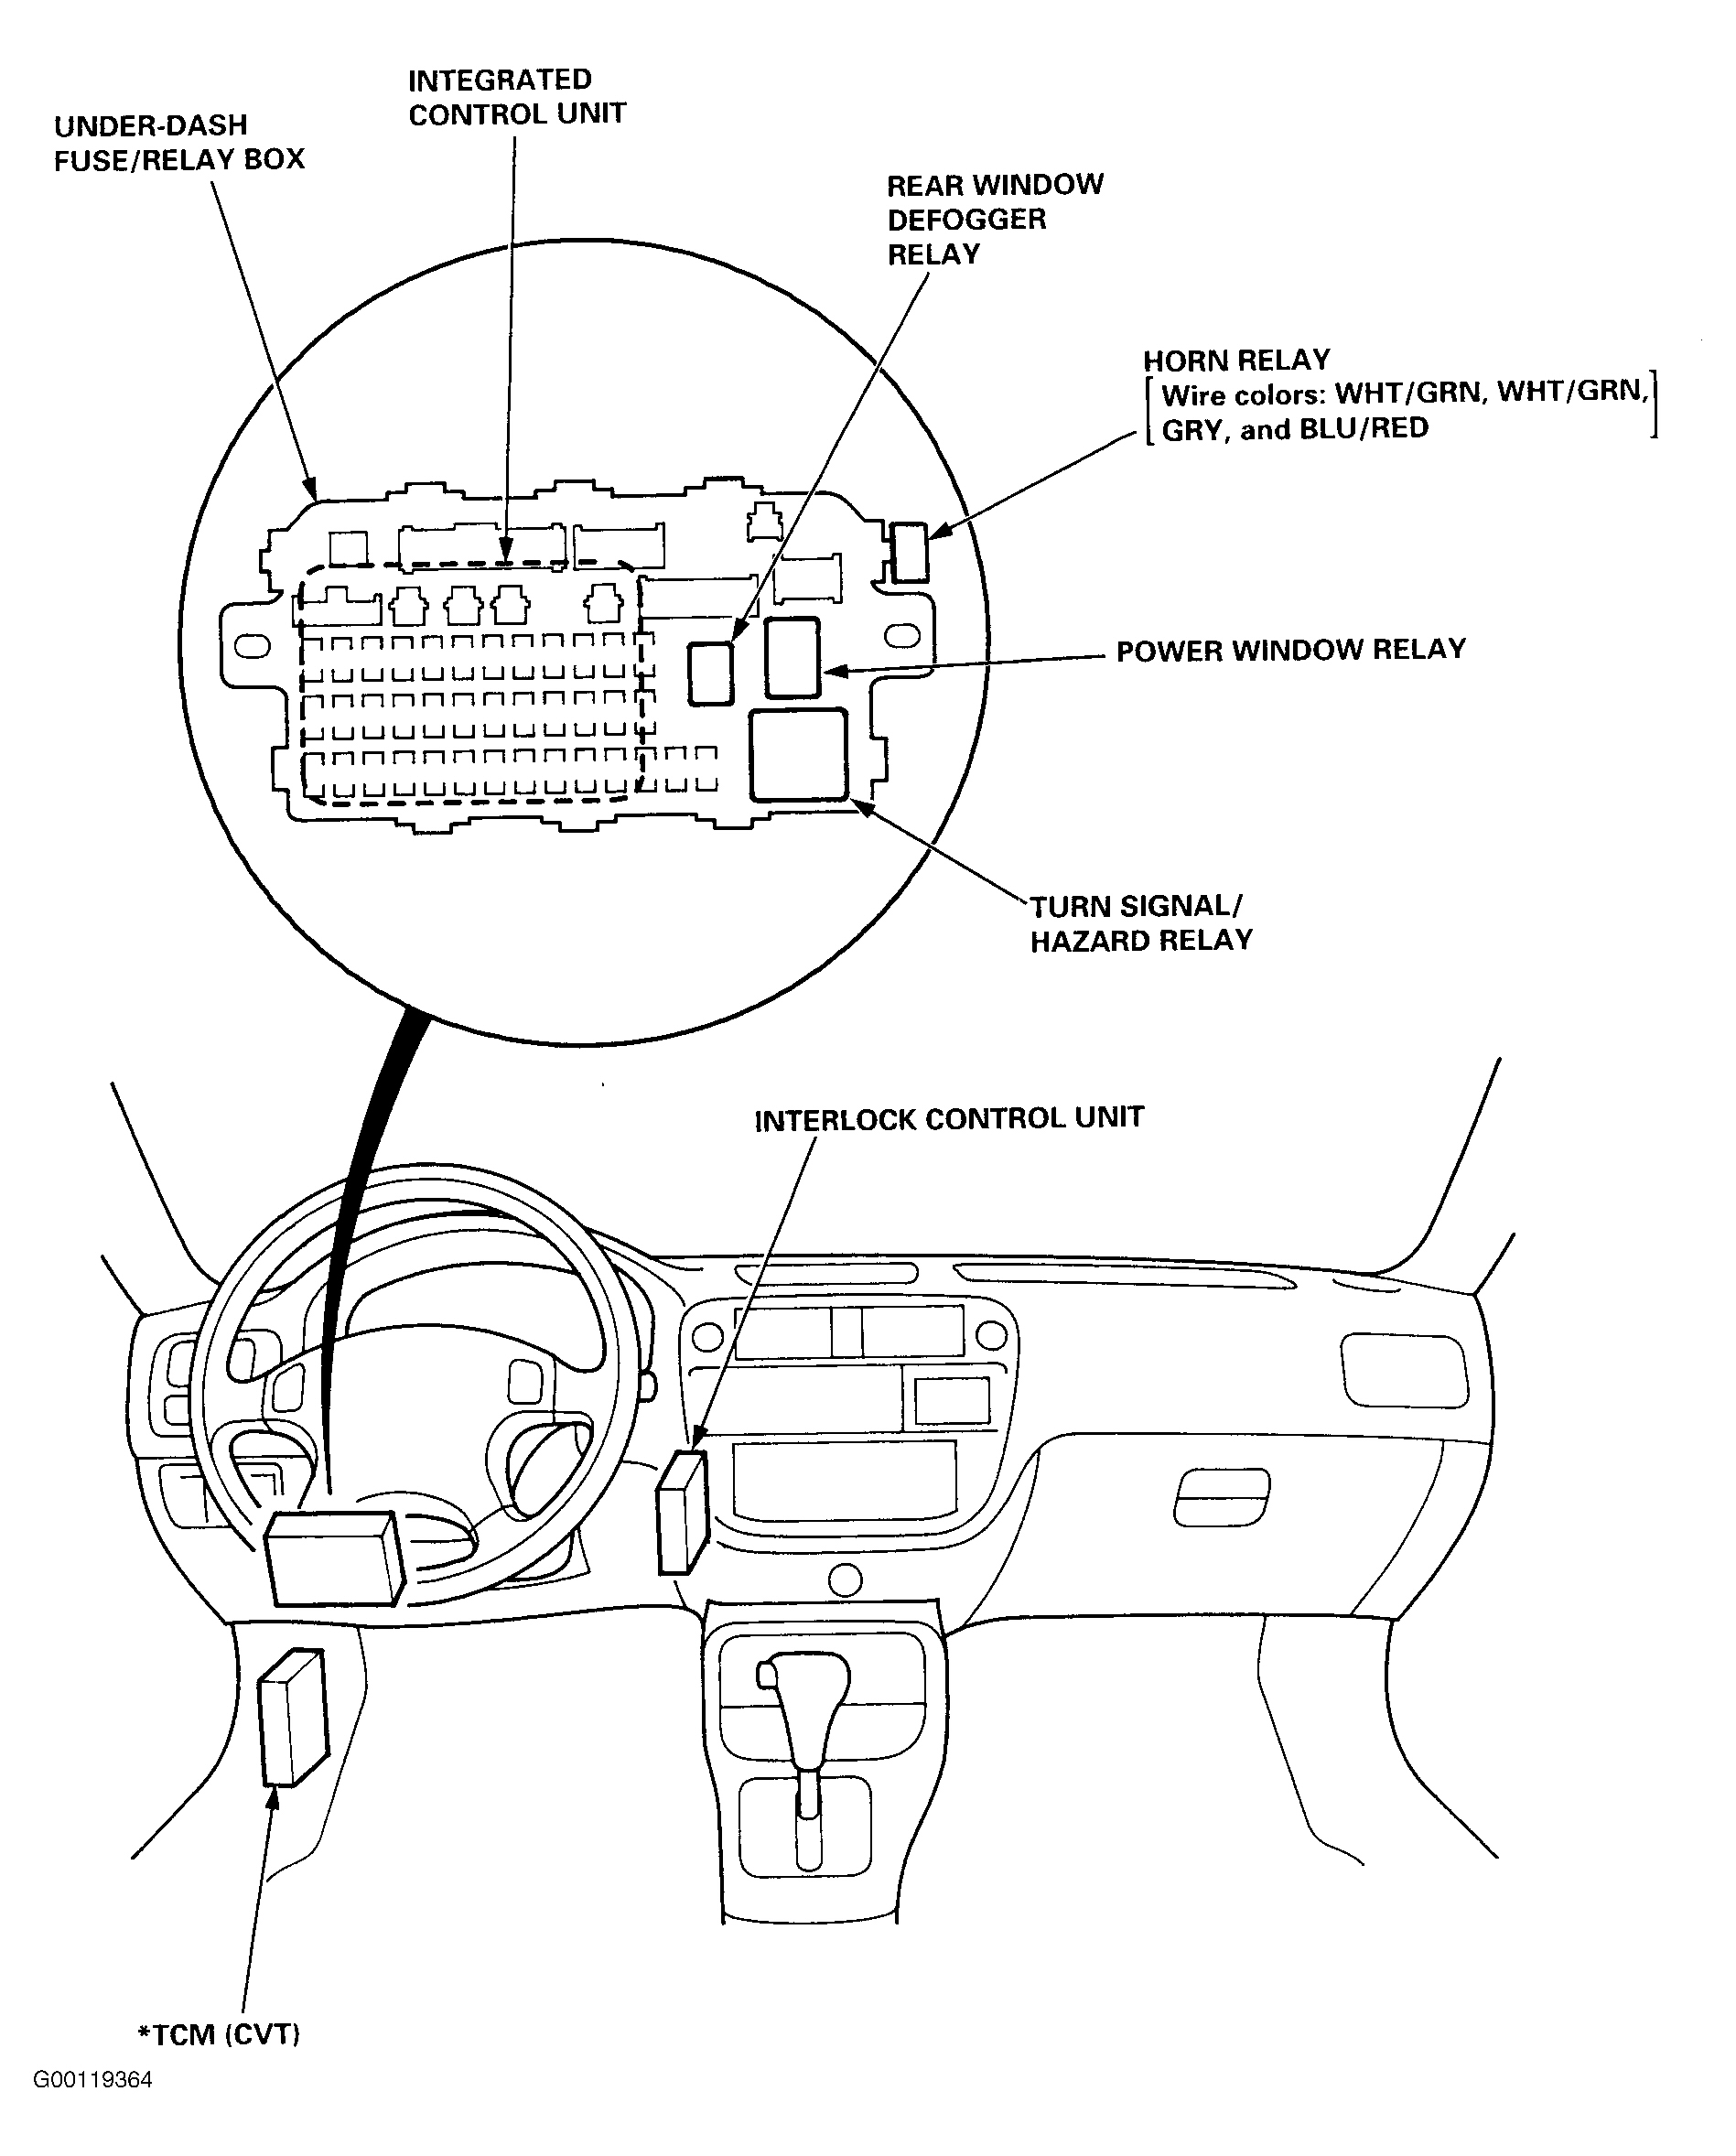 Honda Civic HX 1996 - Component Locations -  Locating Under-Dash Fuse/Relay Box (1996-97)